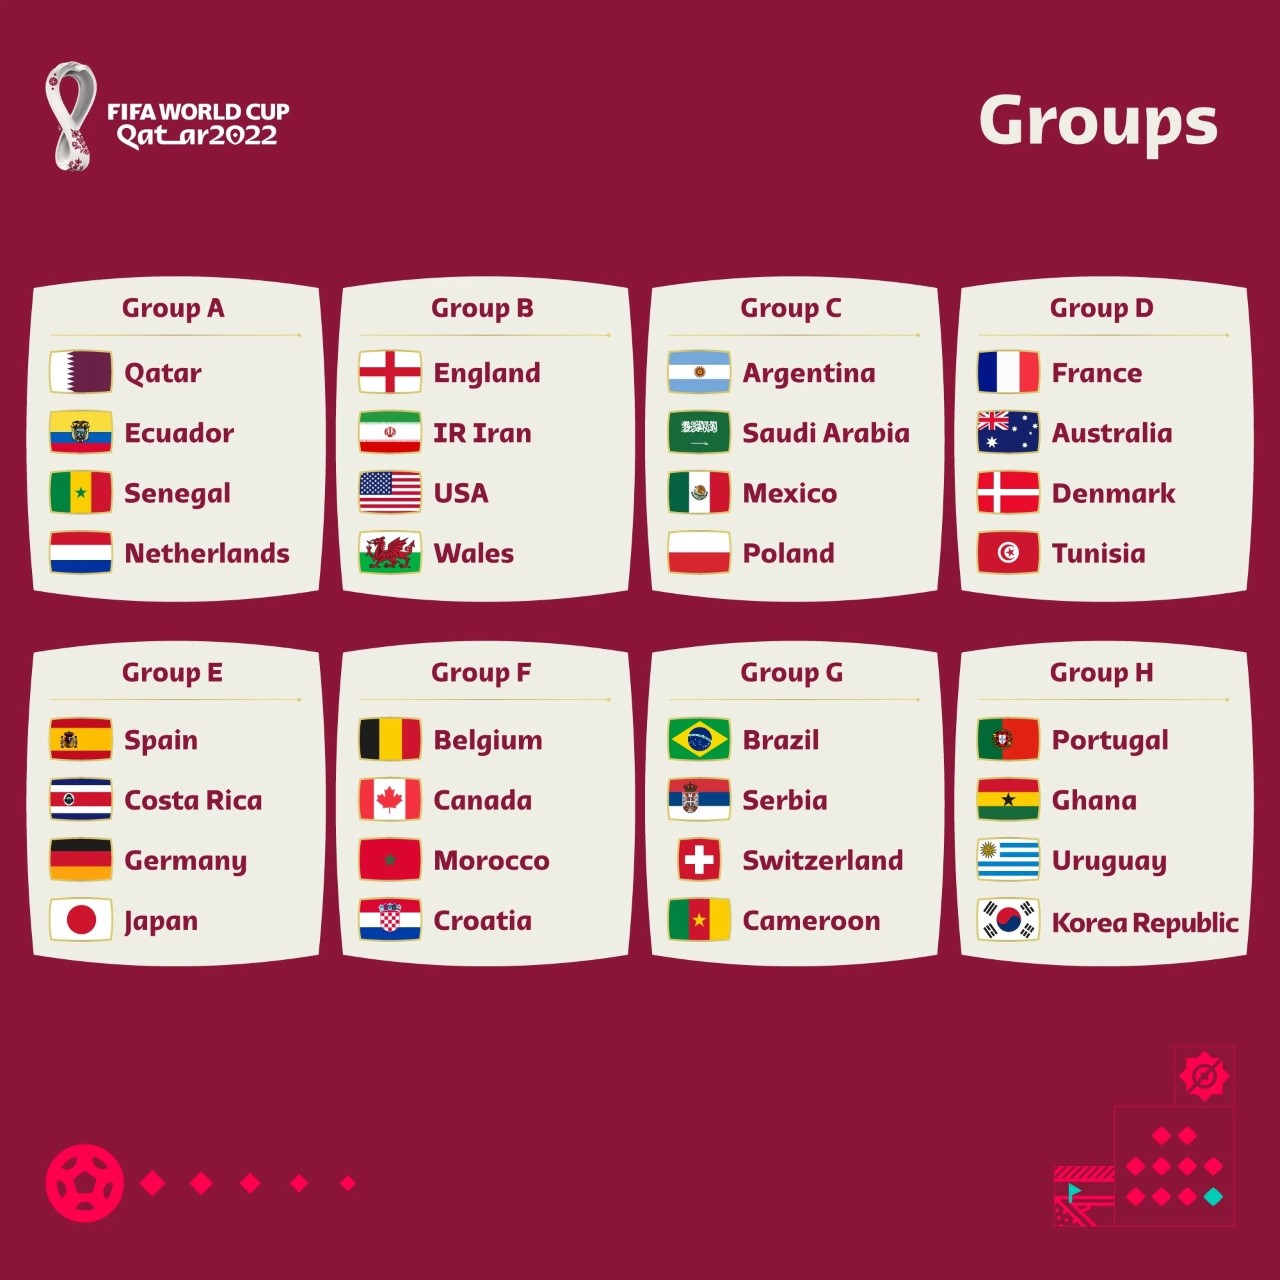 FIFA World Cup 2022 Schedule in Sri Lankan time